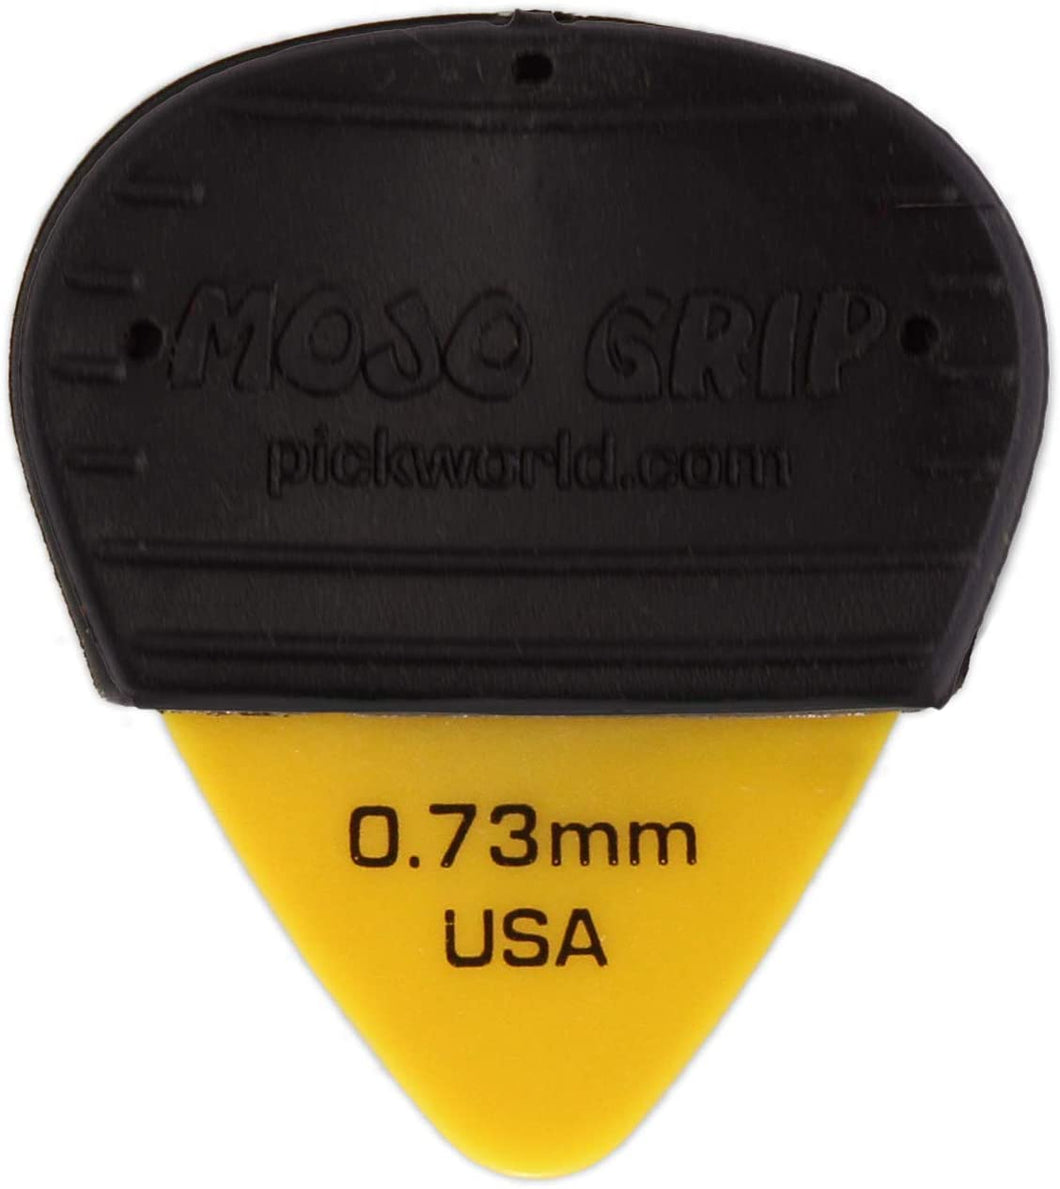 PickWorld Mojo Guitar Picks 3 Picks .73 mm